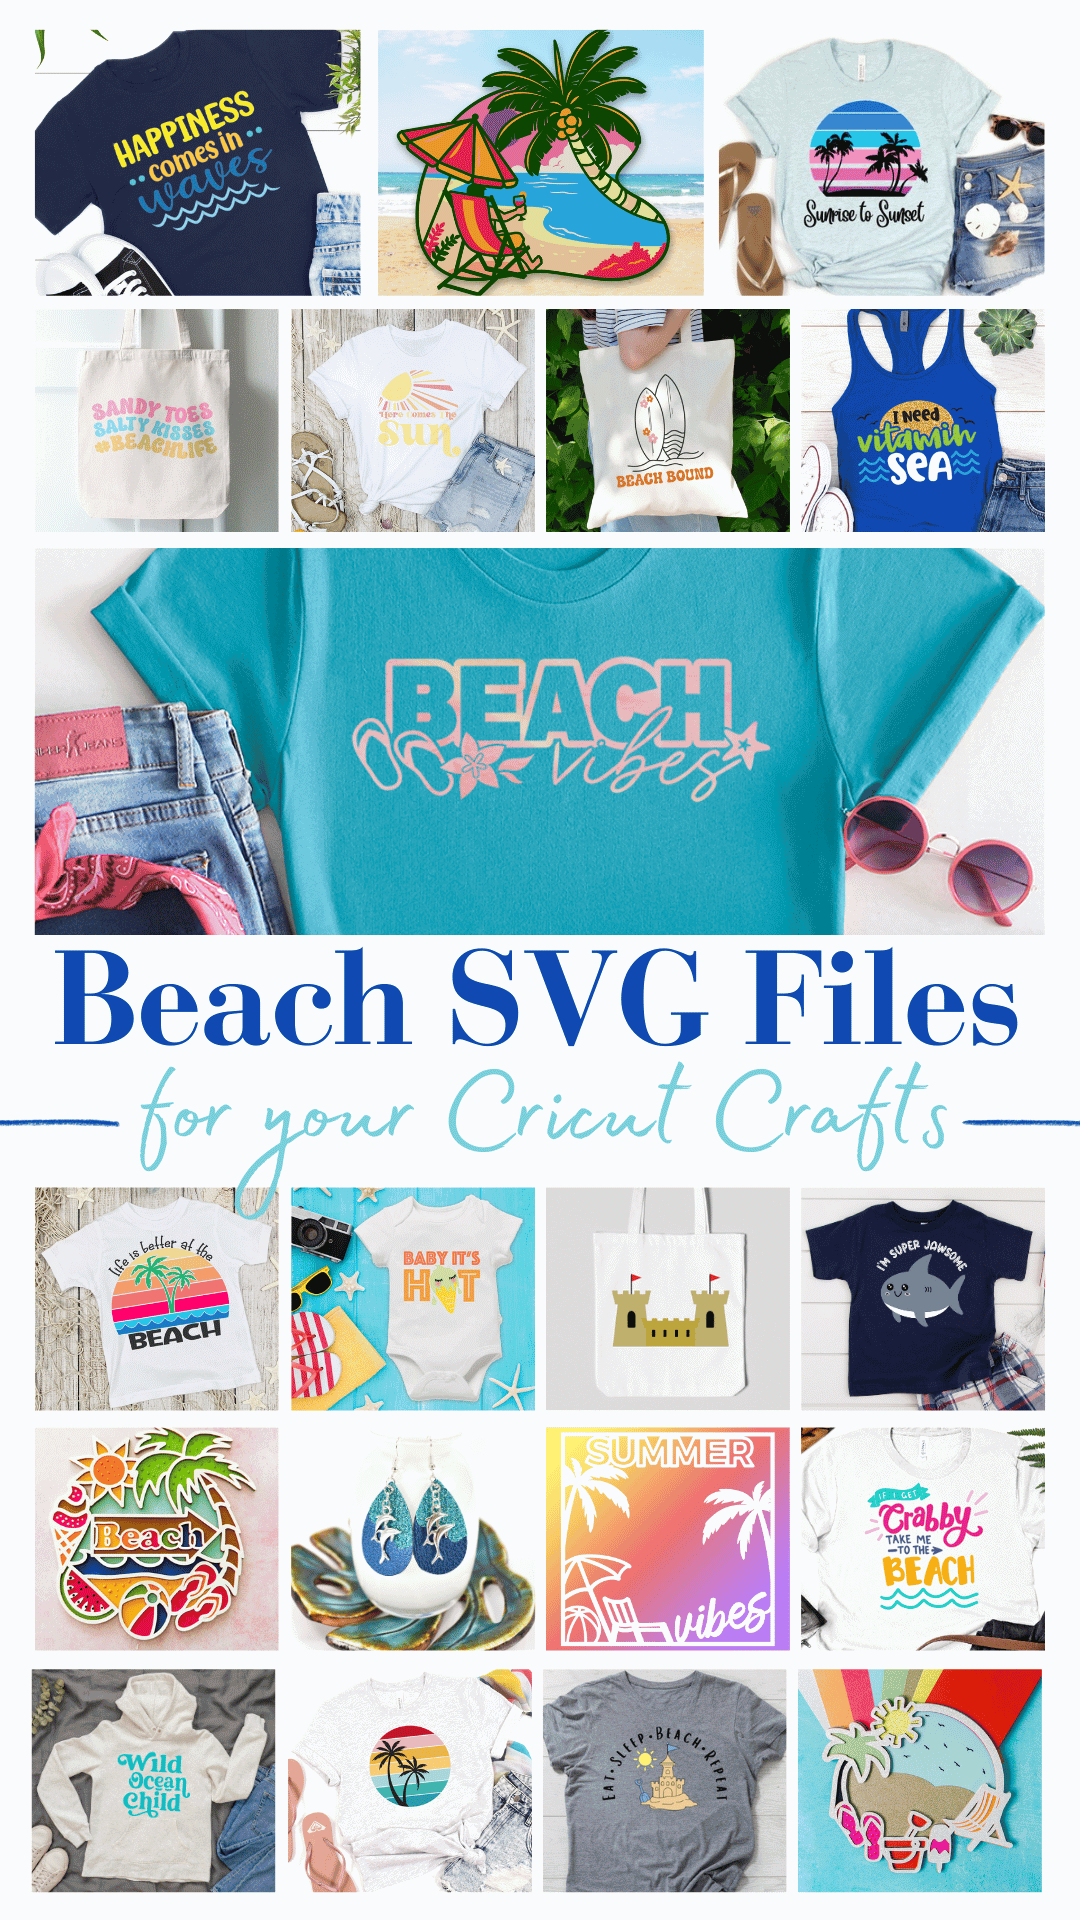 Beach SVG files for Cricut crafts